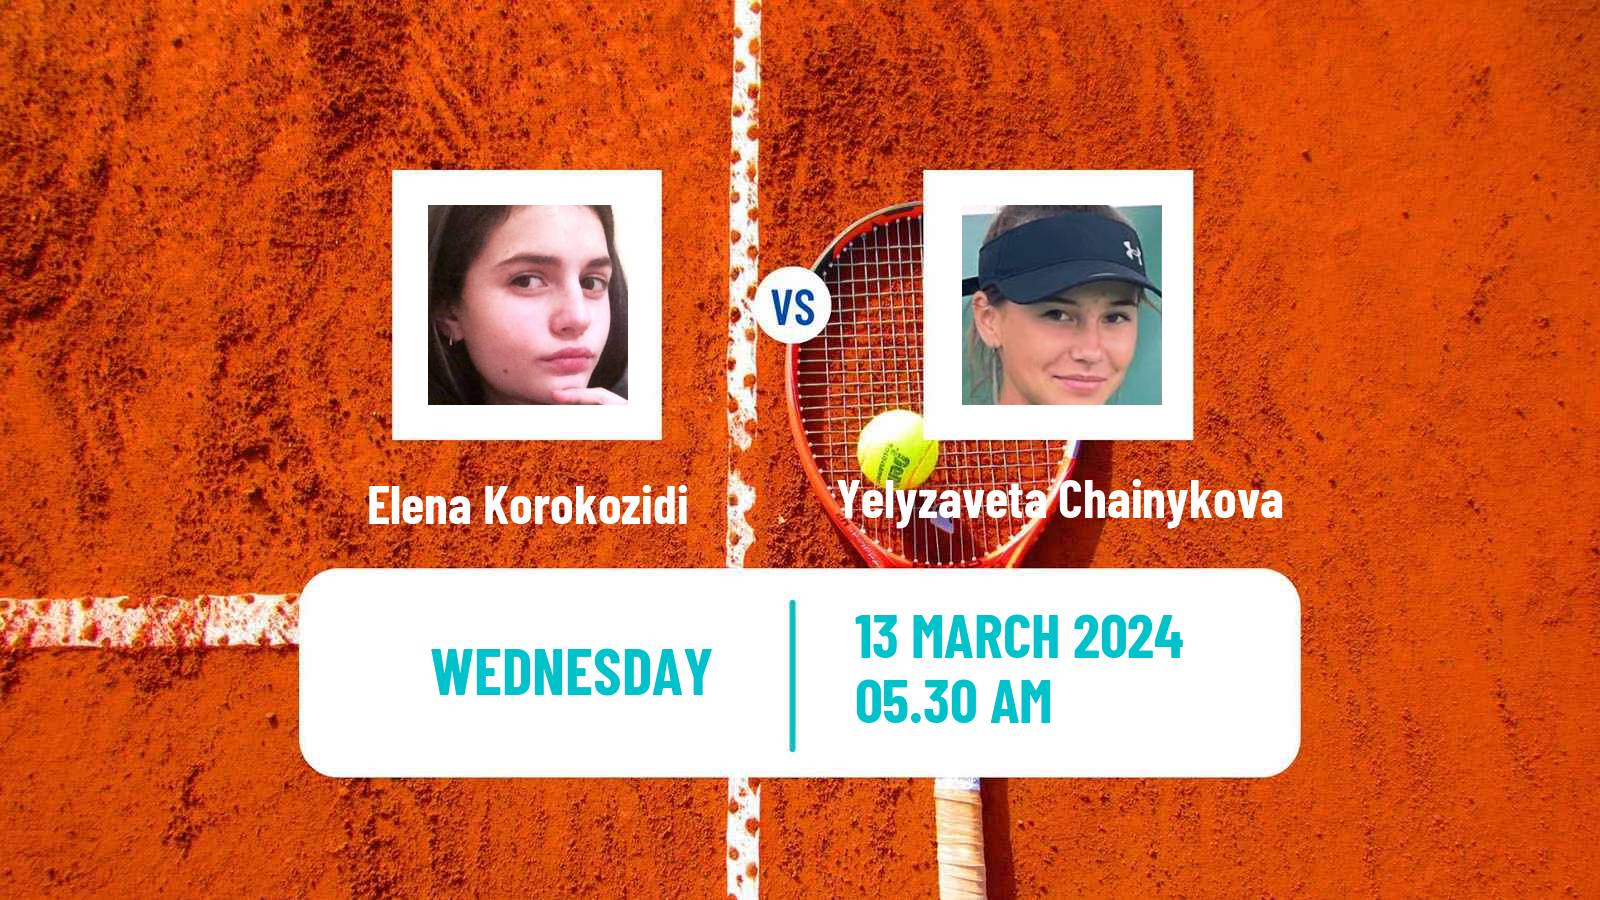 Tennis ITF W15 Heraklion 2 Women Elena Korokozidi - Yelyzaveta Chainykova